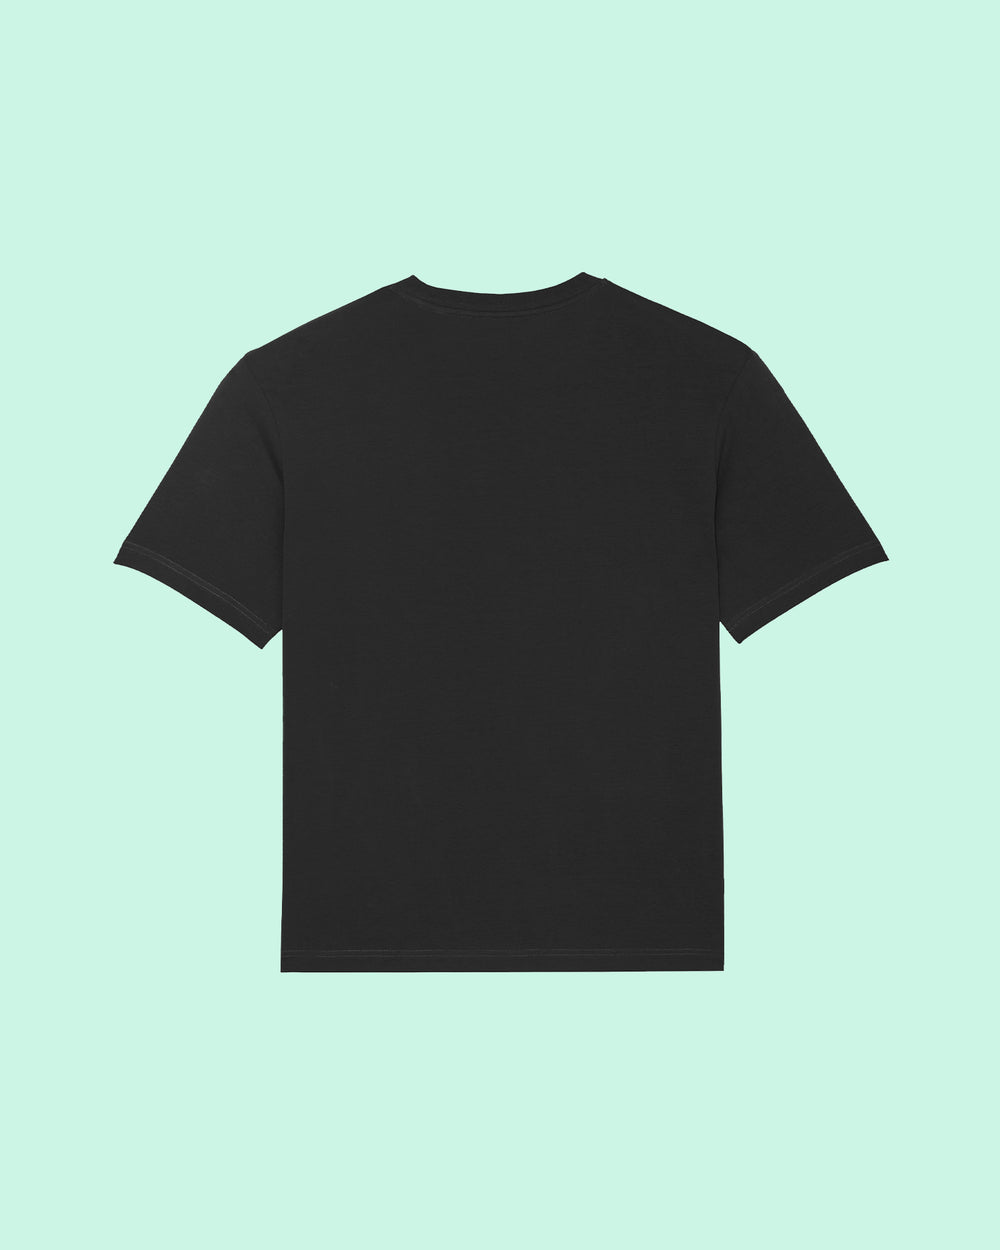 CNNBS Unisex T-Shirt by SAINFORT